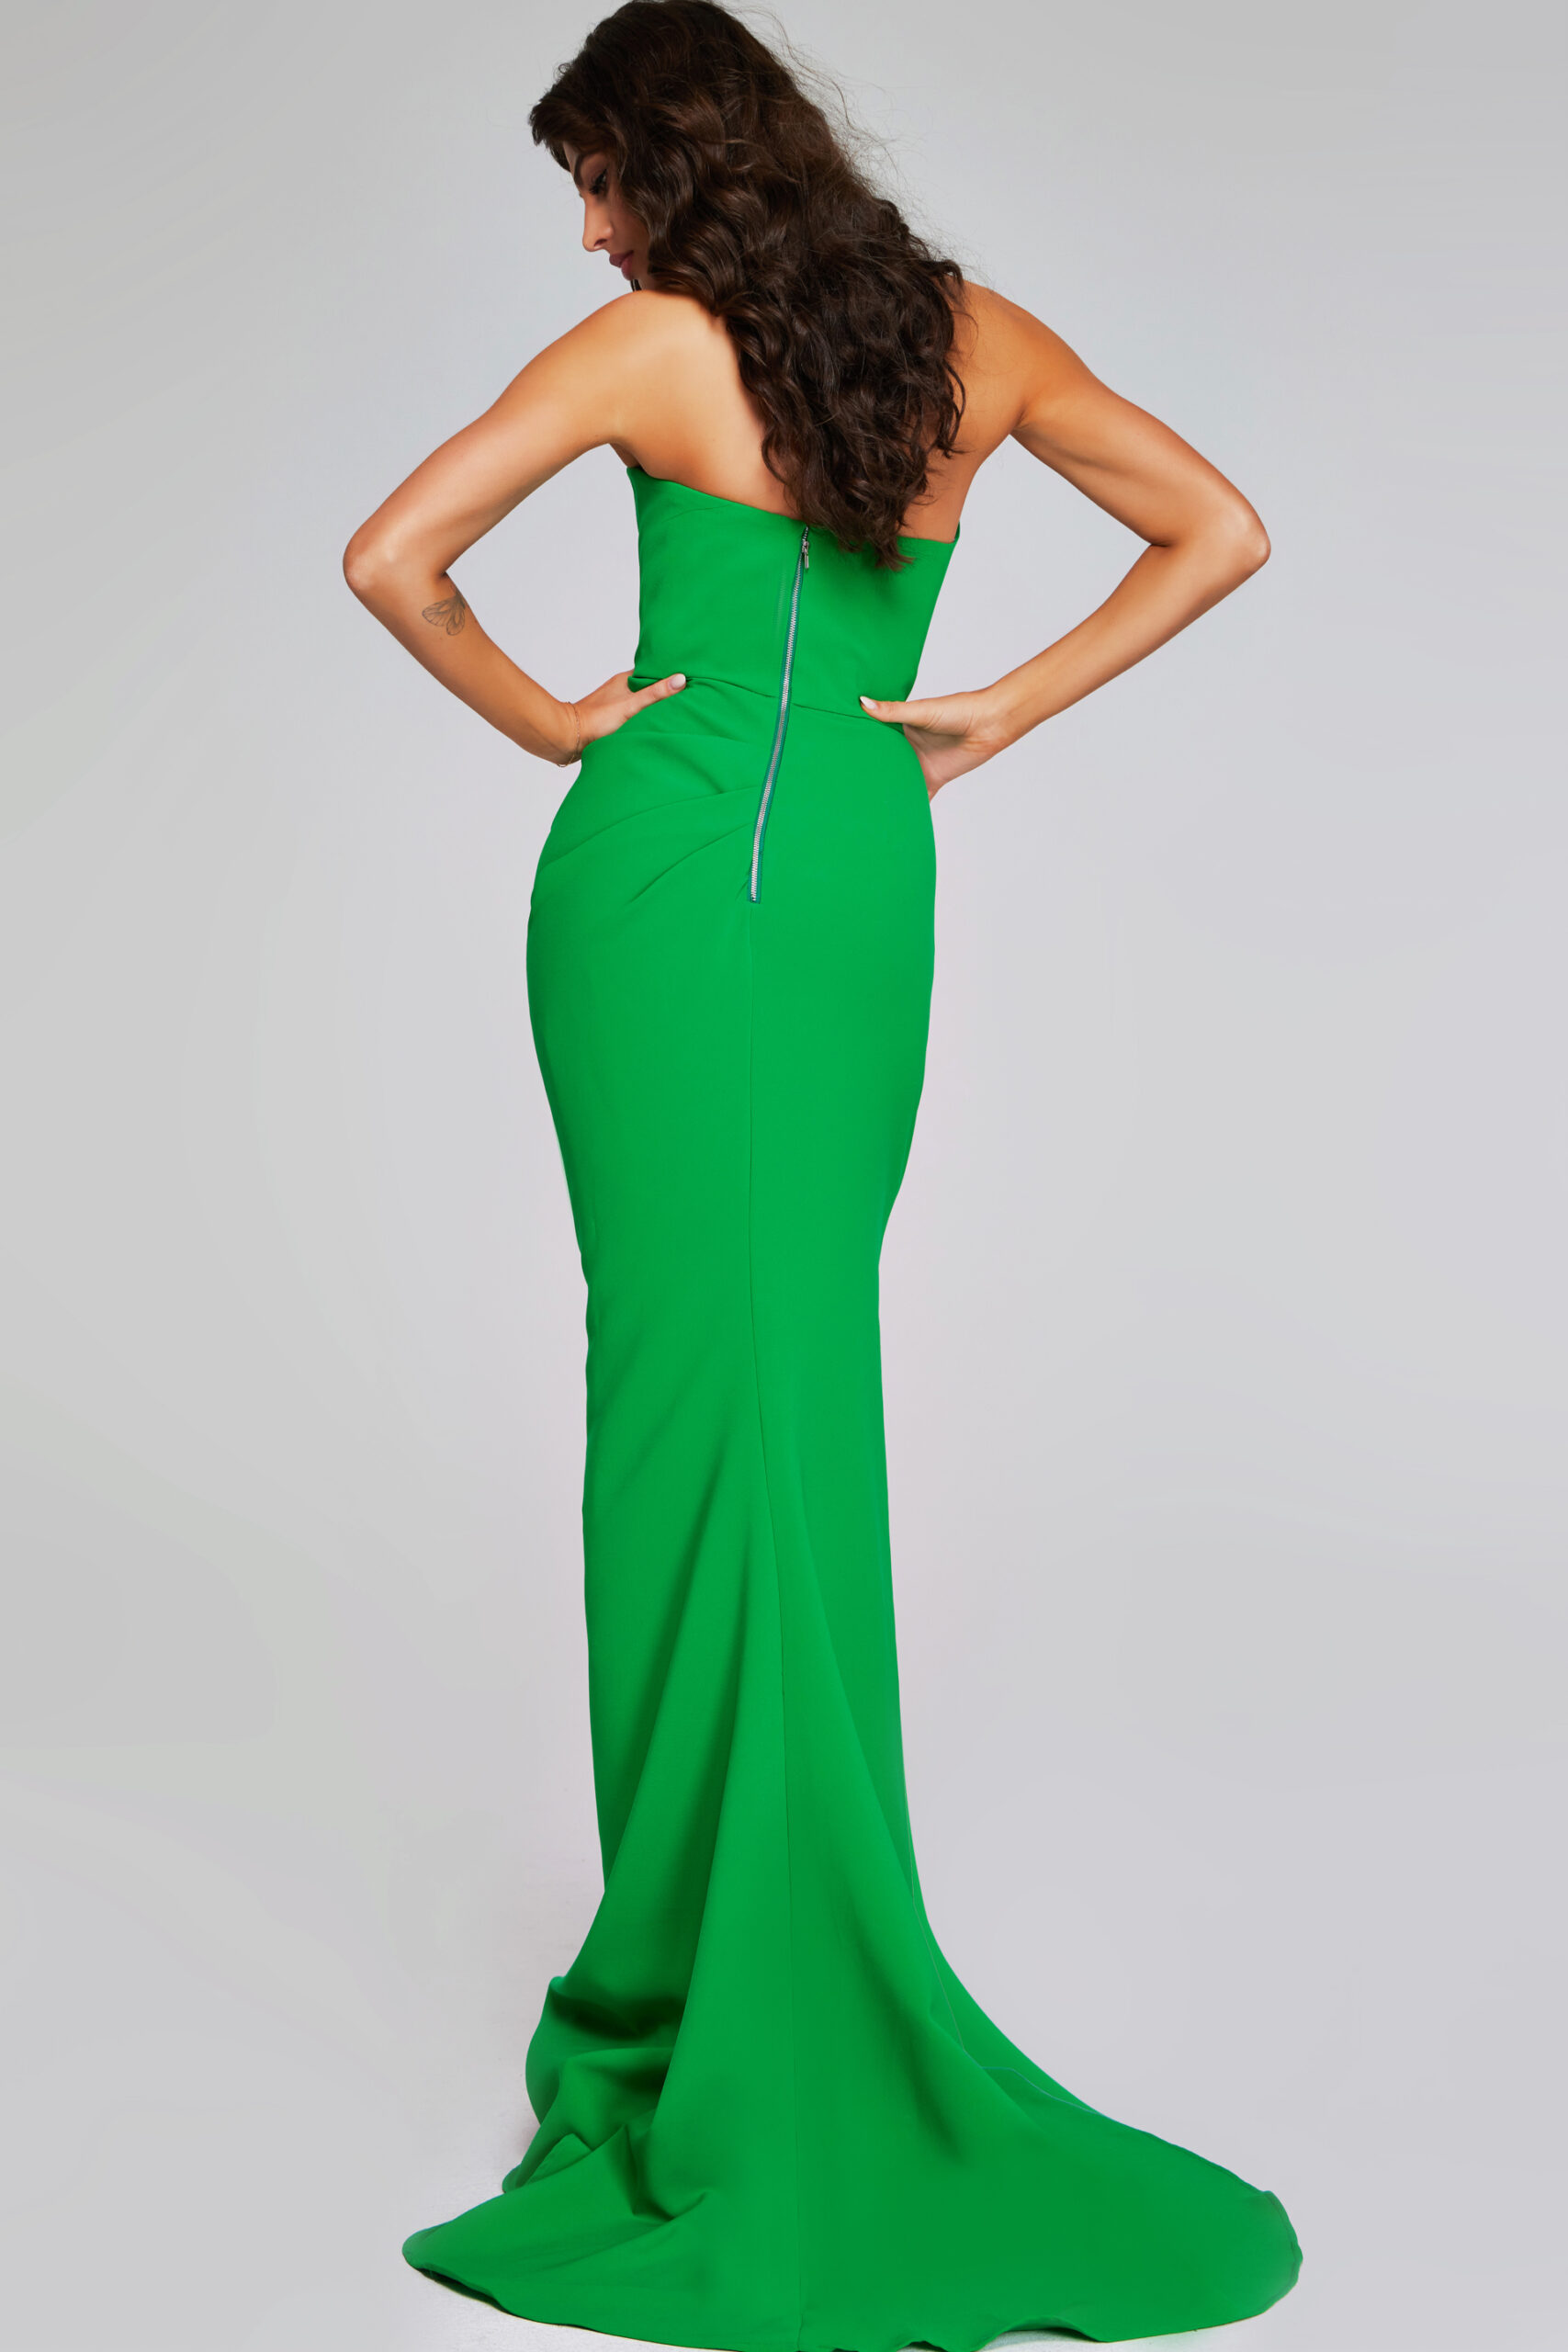 Classic Green One-Shoulder Mermaid Dress 40301